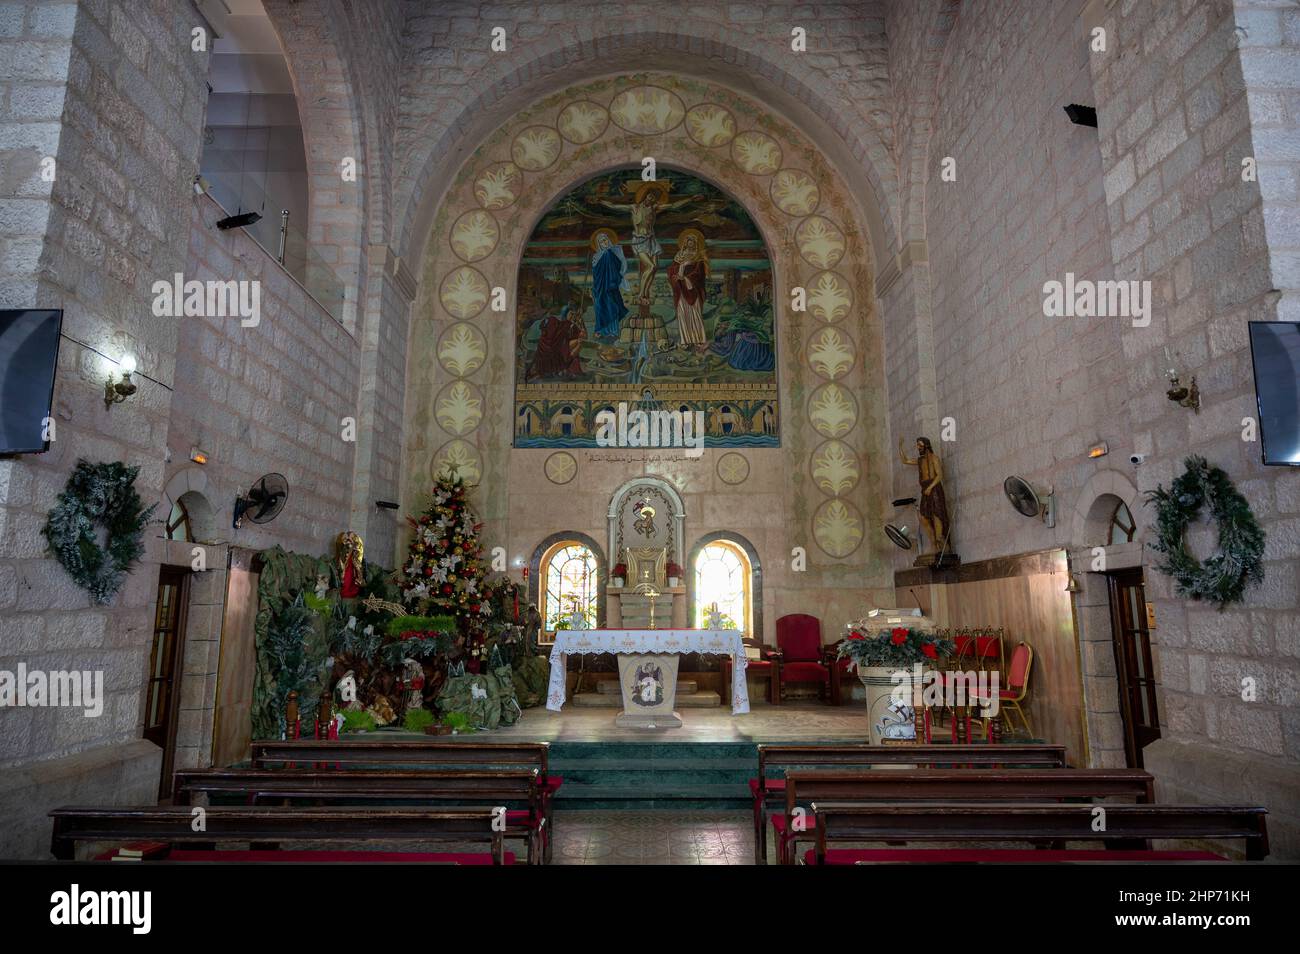 Altar and interior of Saint John the Baptist church in Madaba, Jordan Stock Photo